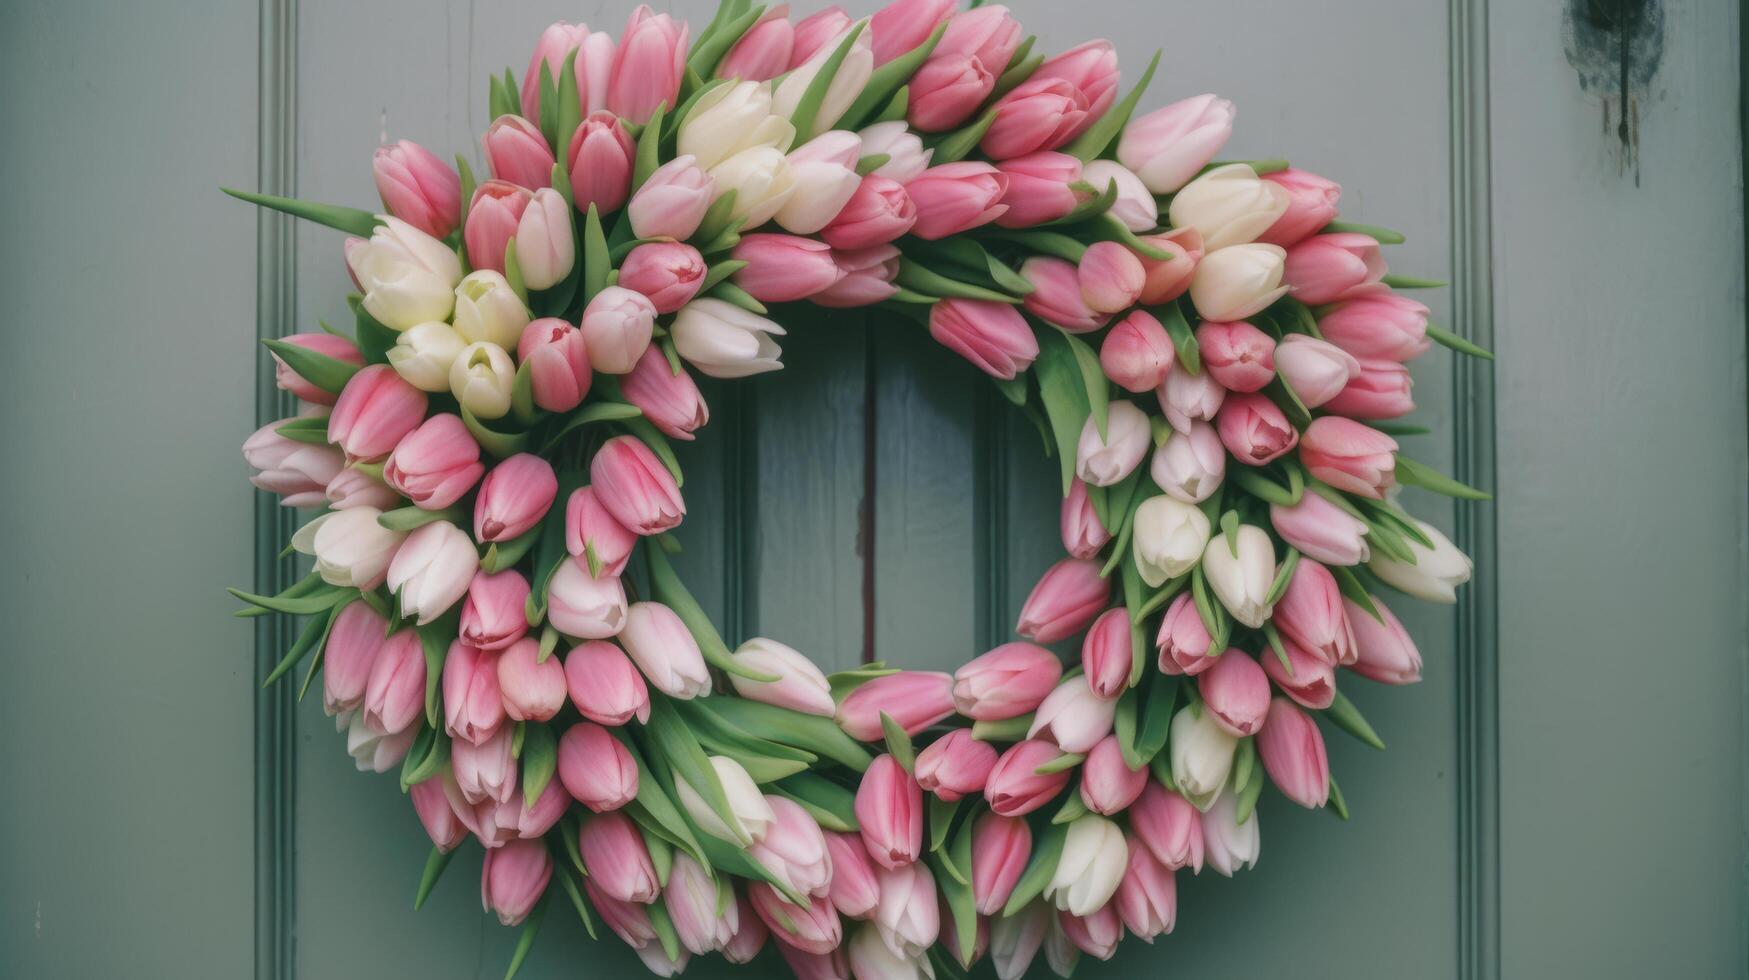 Wreath of tulip flowers. Illustration photo